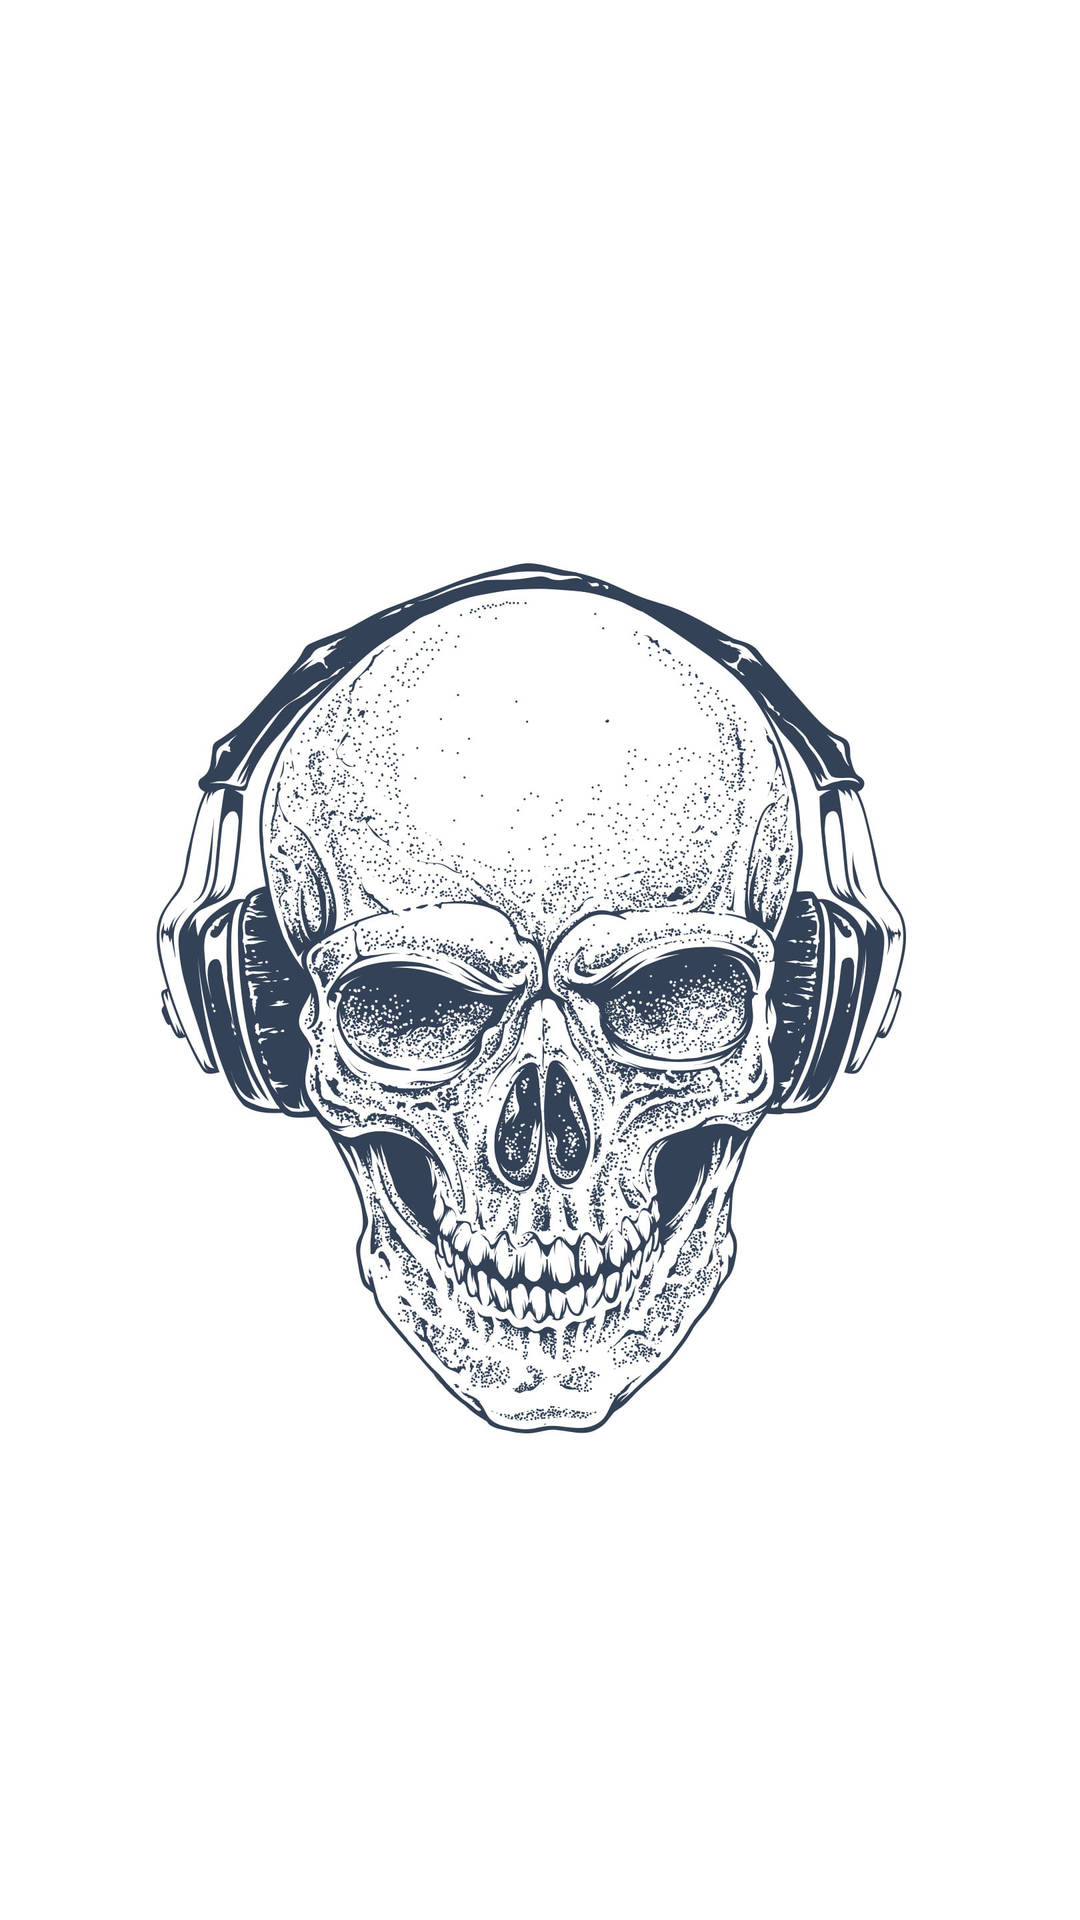 Skull With Headphones Hd Tattoo